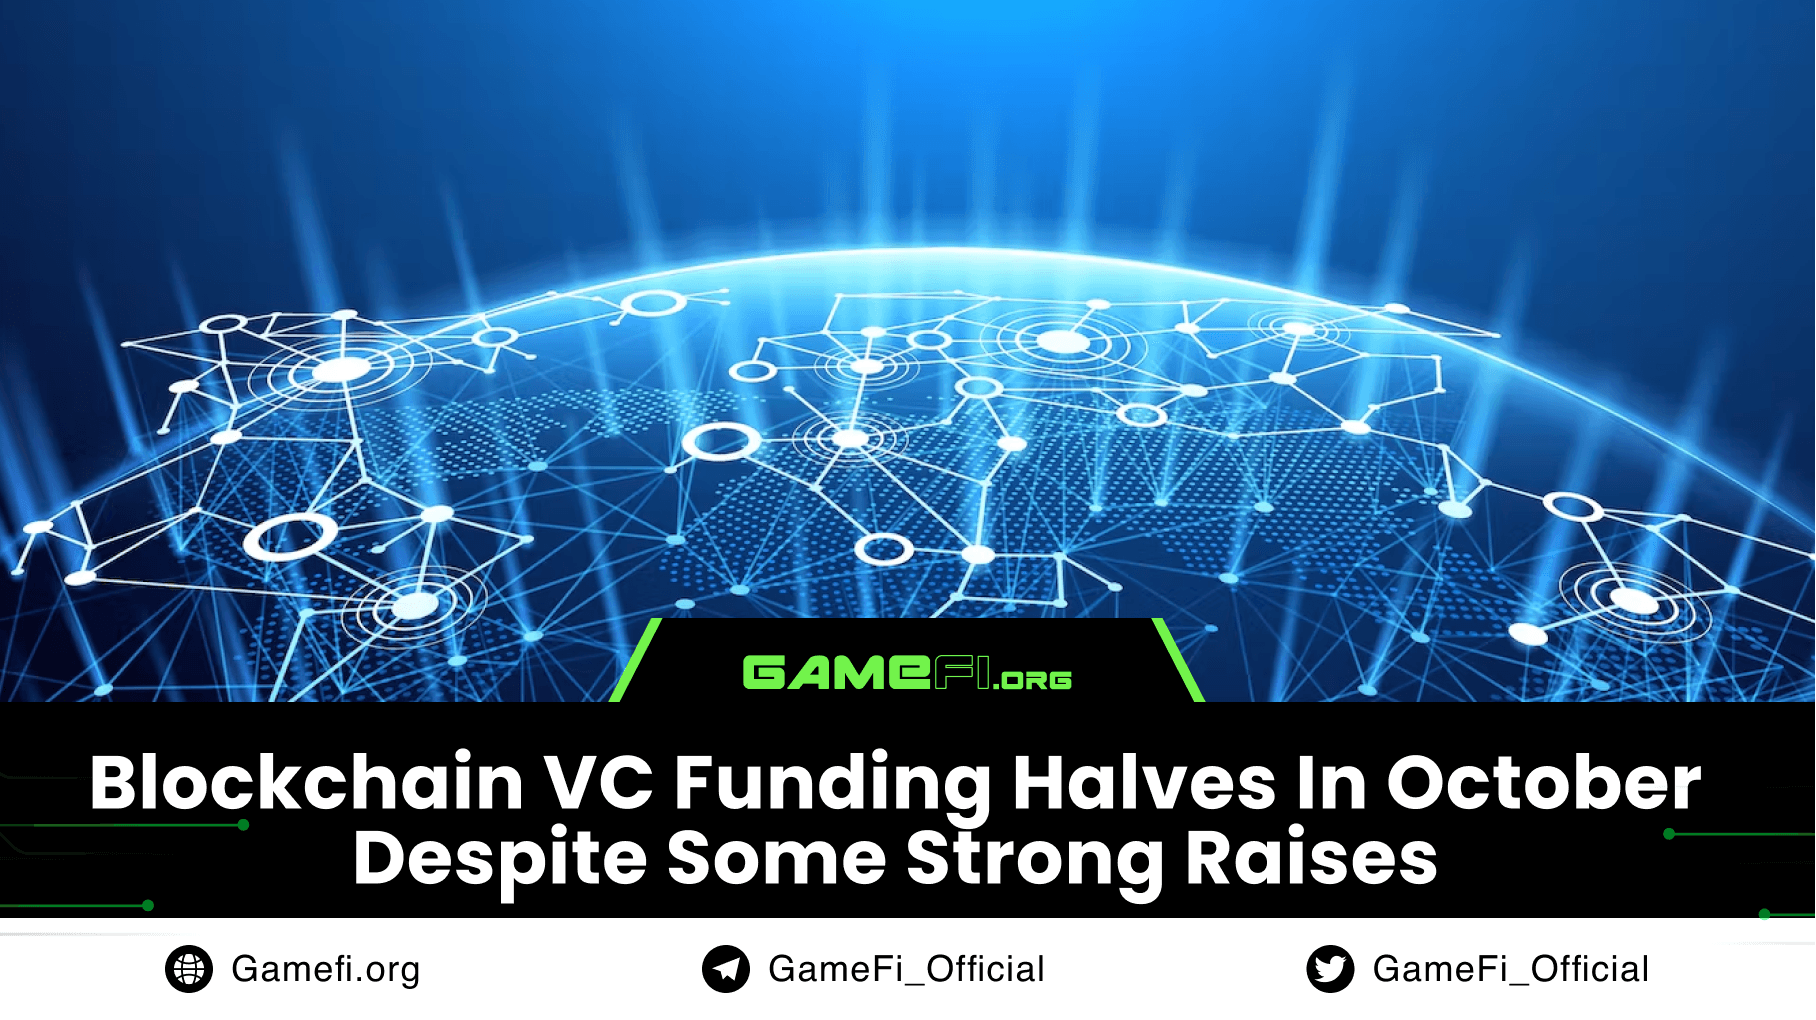 Blockchain VC Funding Halves In October Despite Some Strong Raises